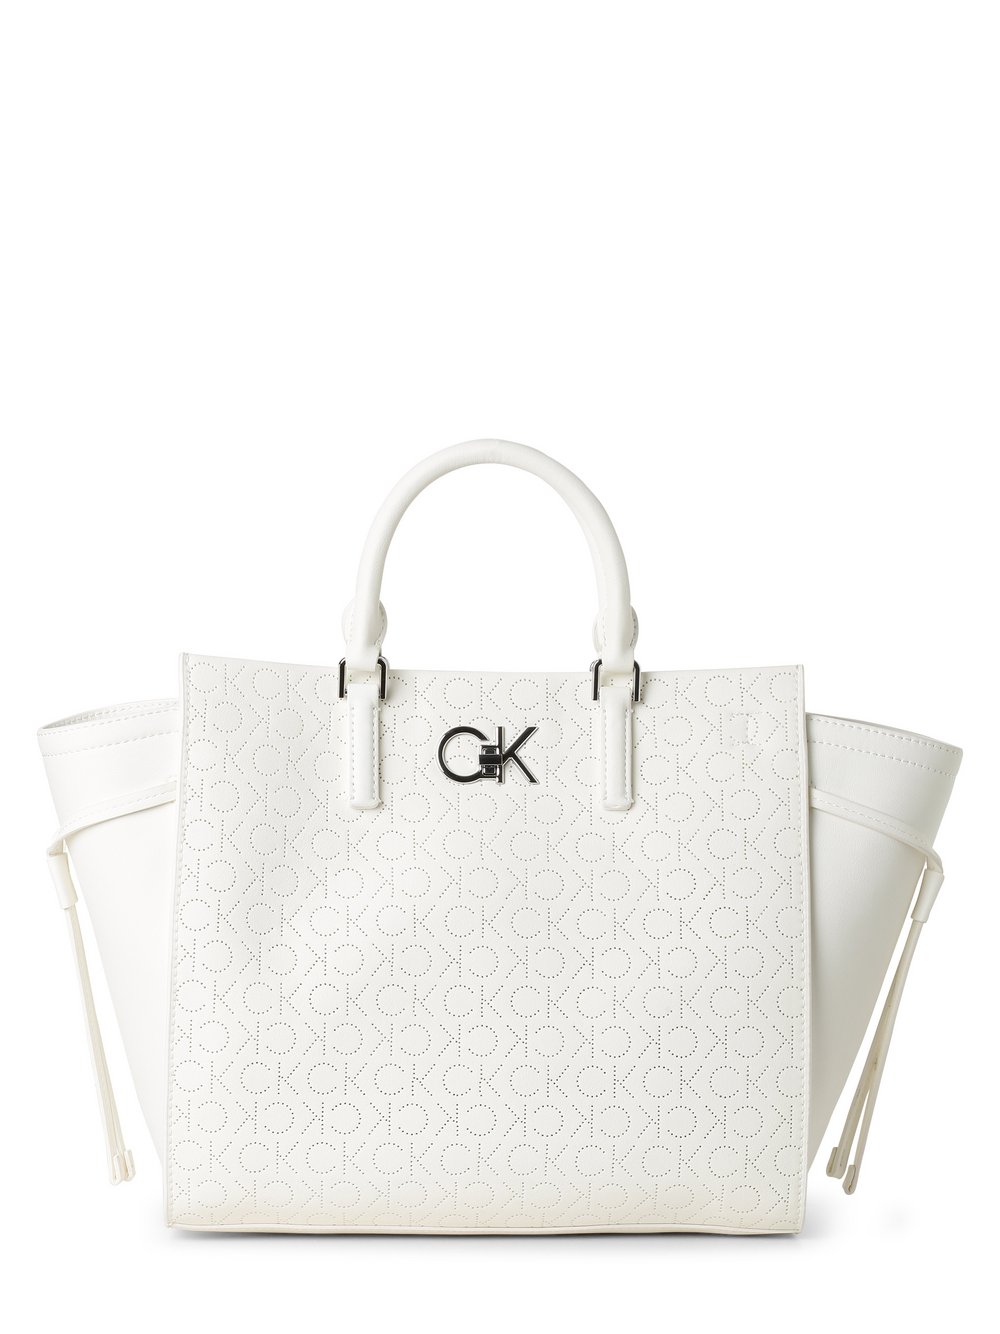 Calvin Klein - Damska torba shopper, biały